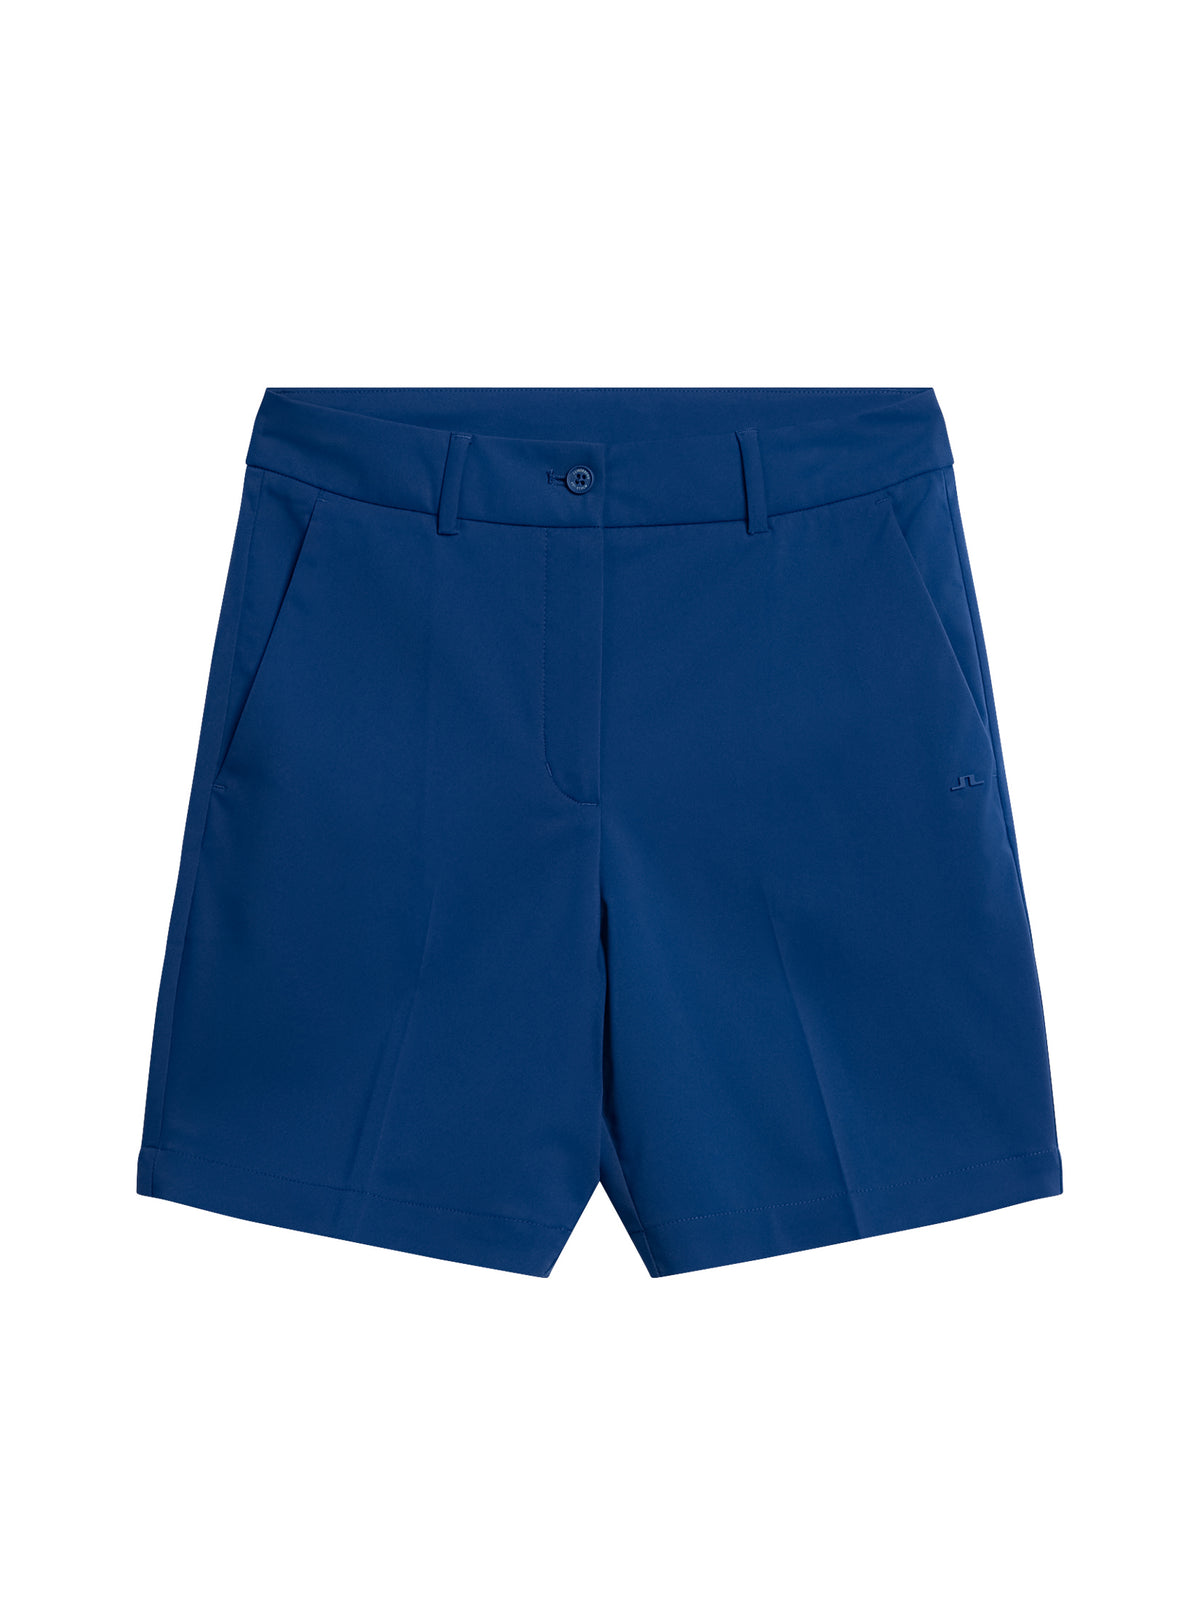 Gwen Long Shorts / Estate Blue